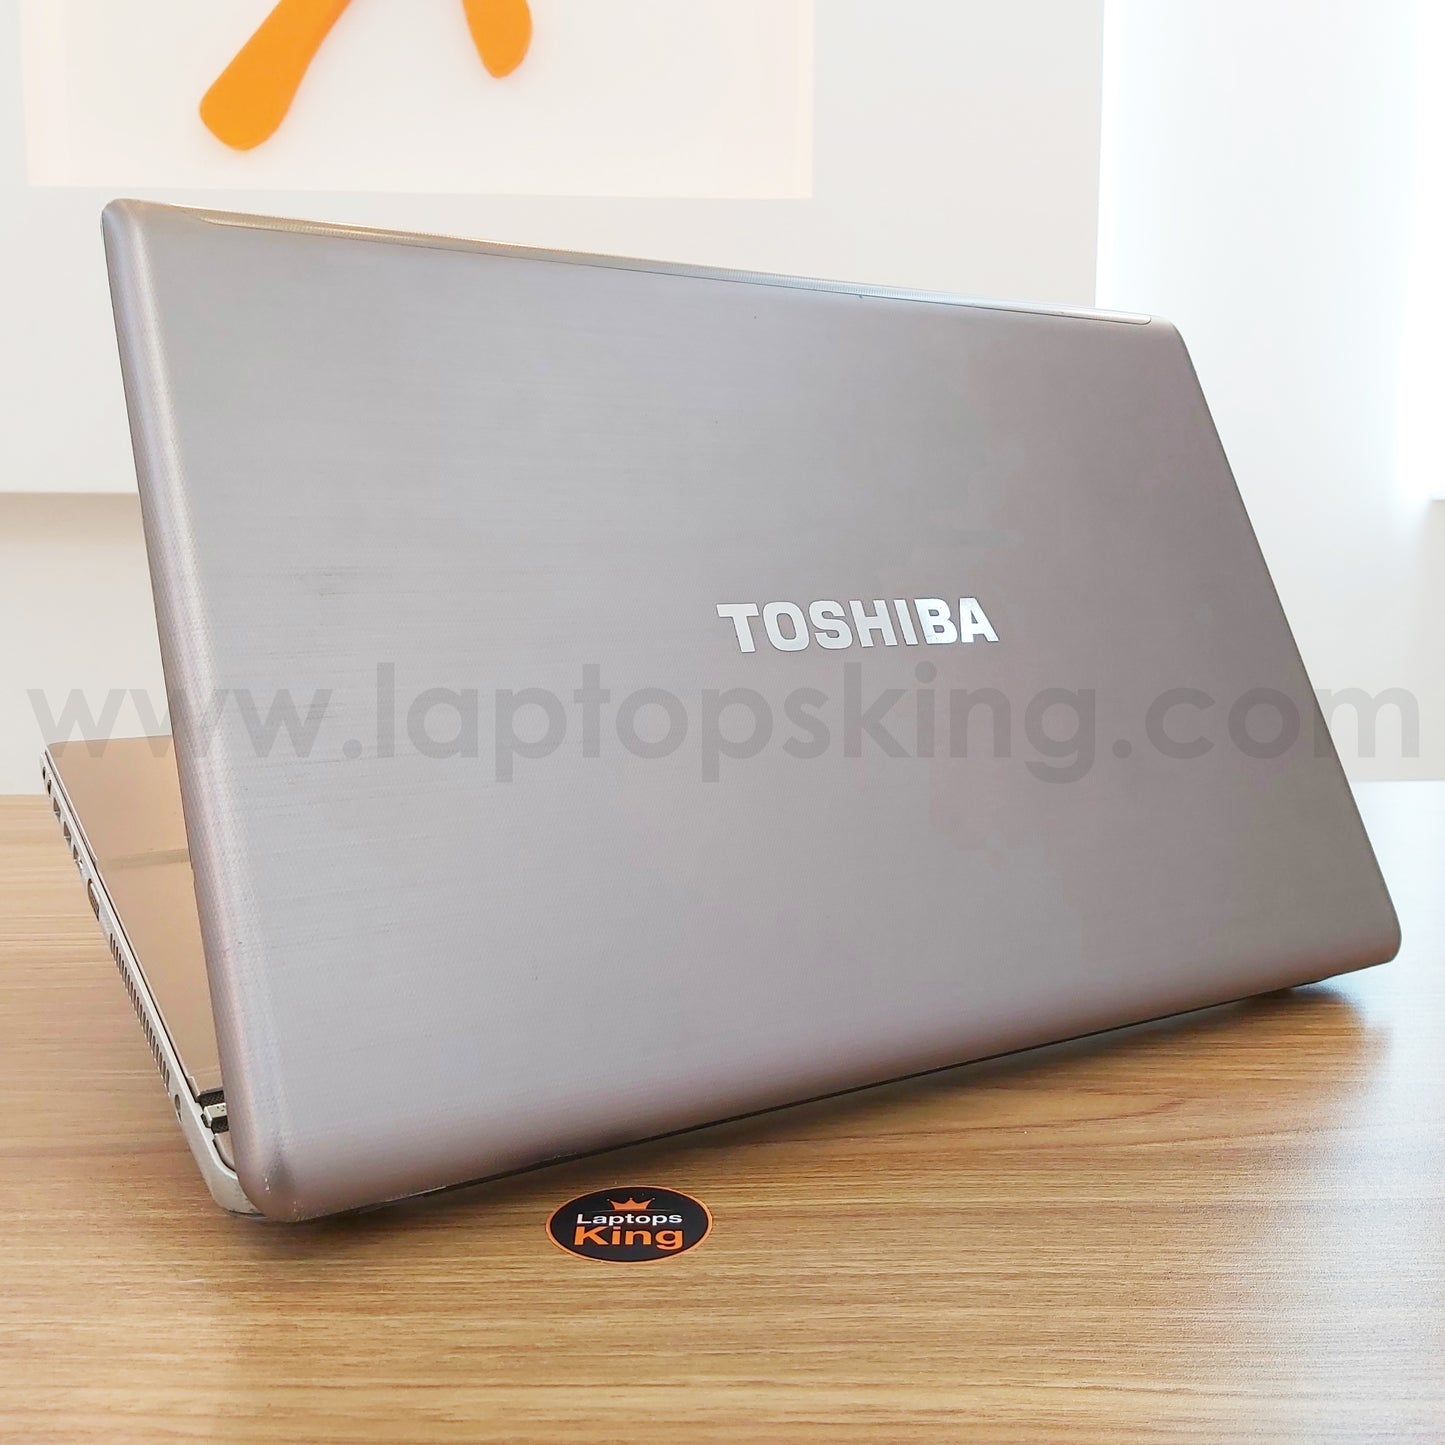 Toshiba Satellite P875 i5 17.3" Laptop (Used Very Clean)